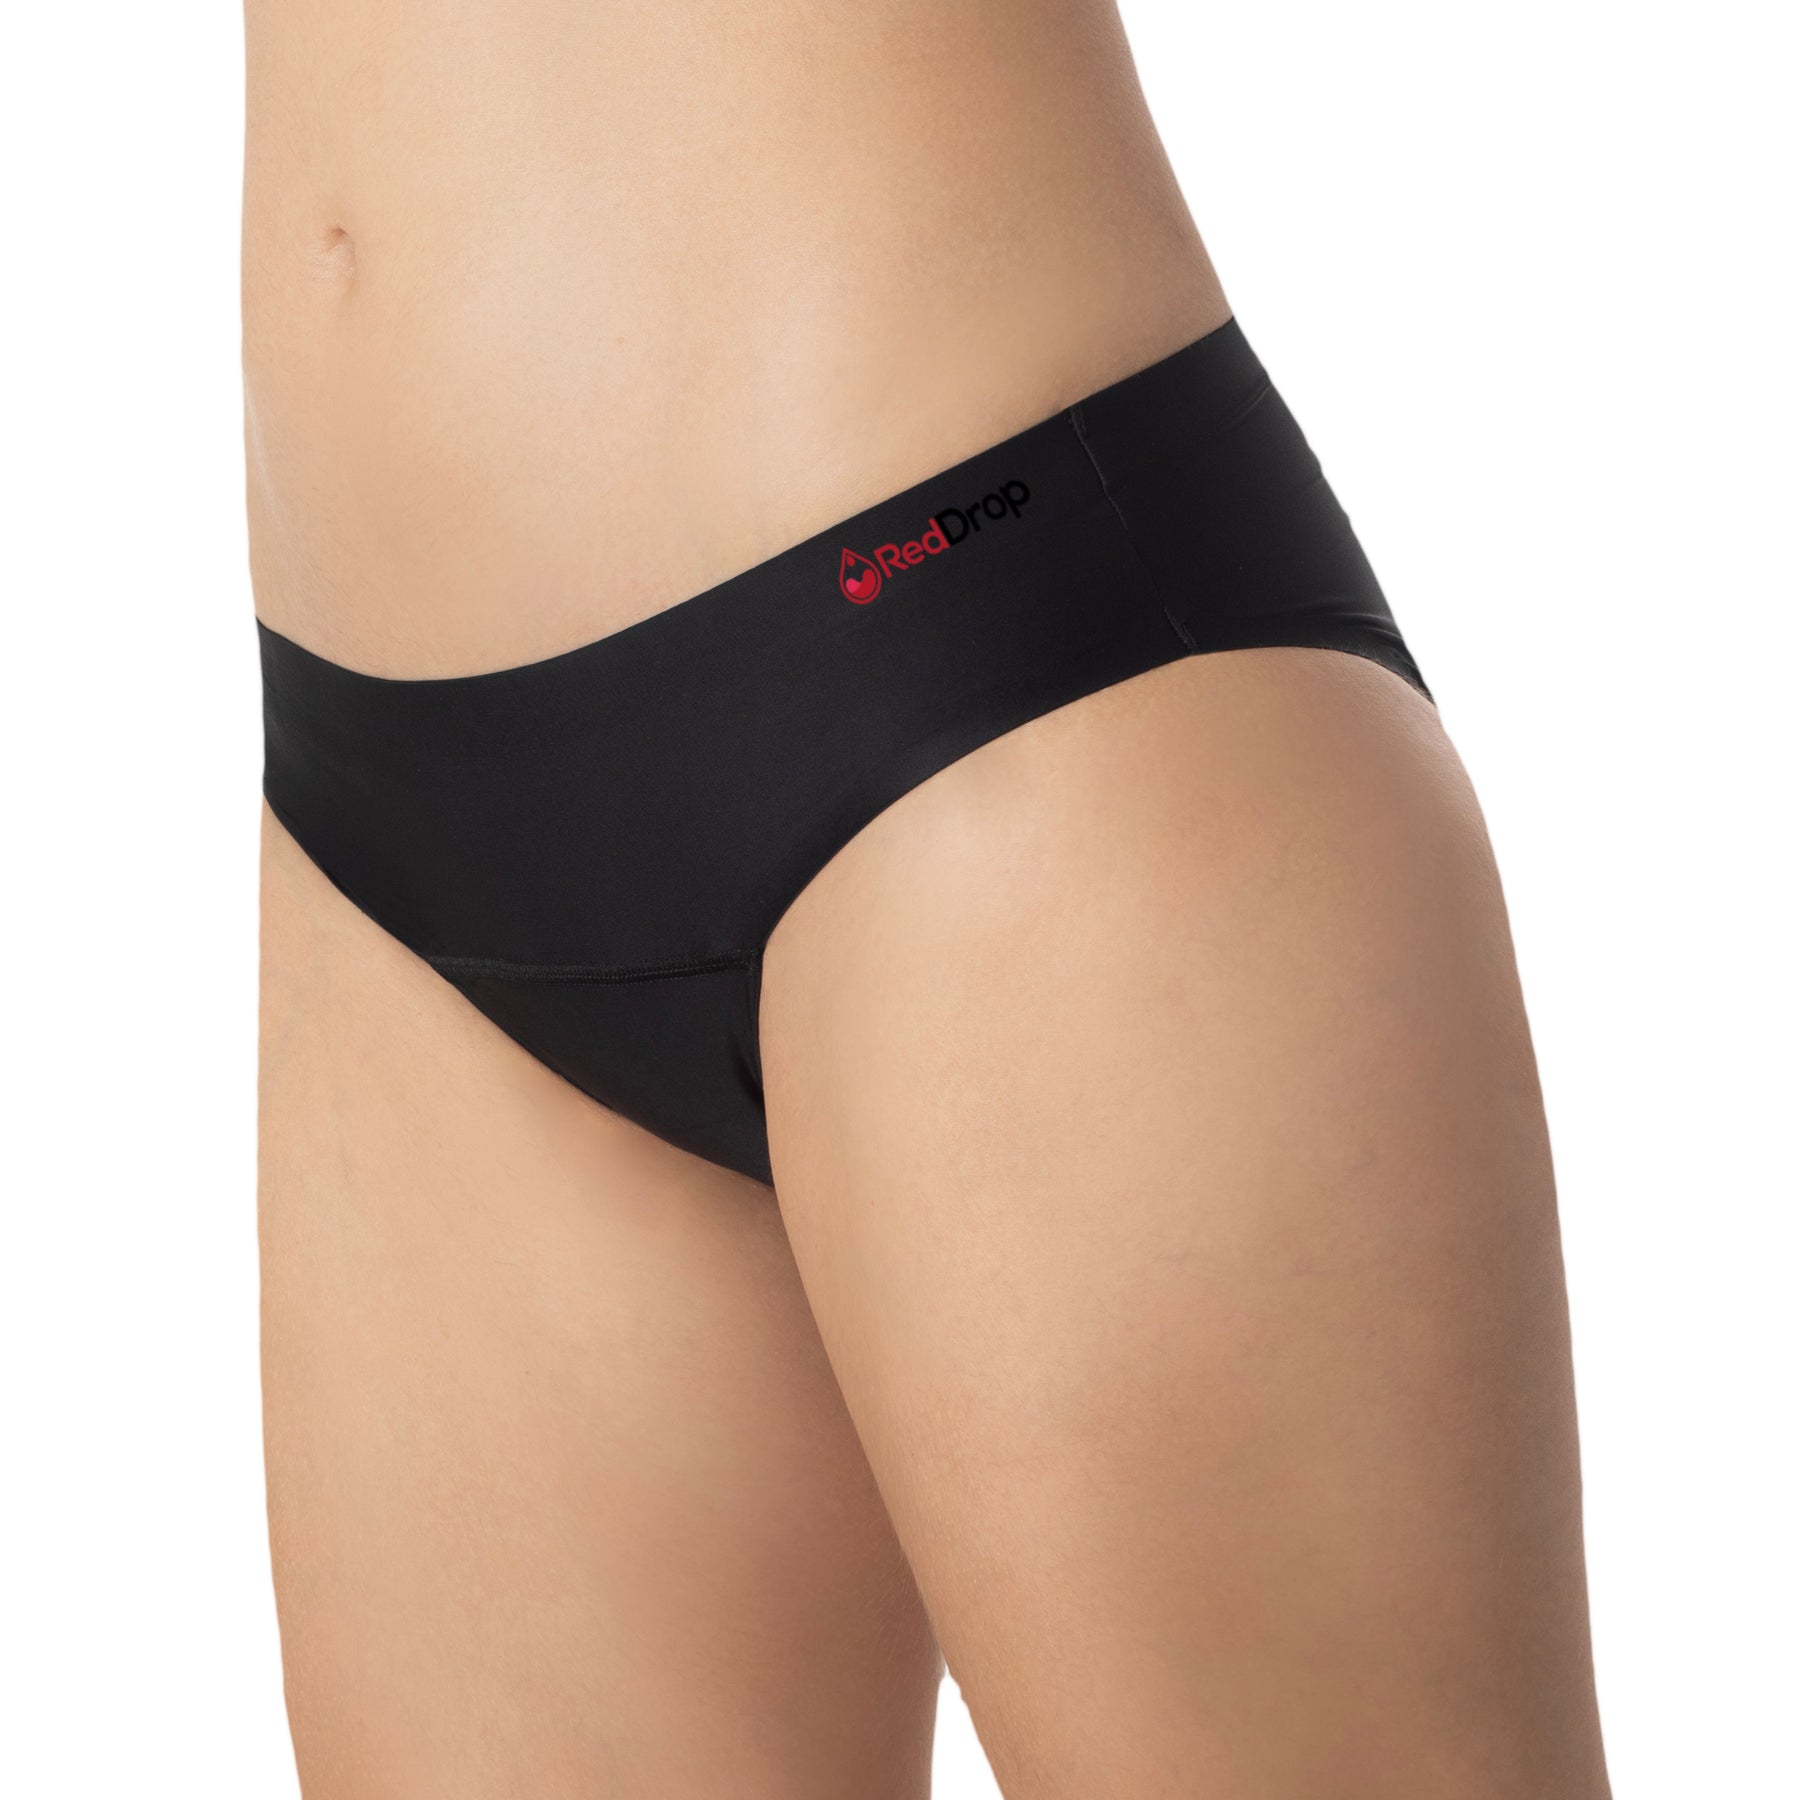 Tween Period Underwear - Single Pair, RedDrop Inc.